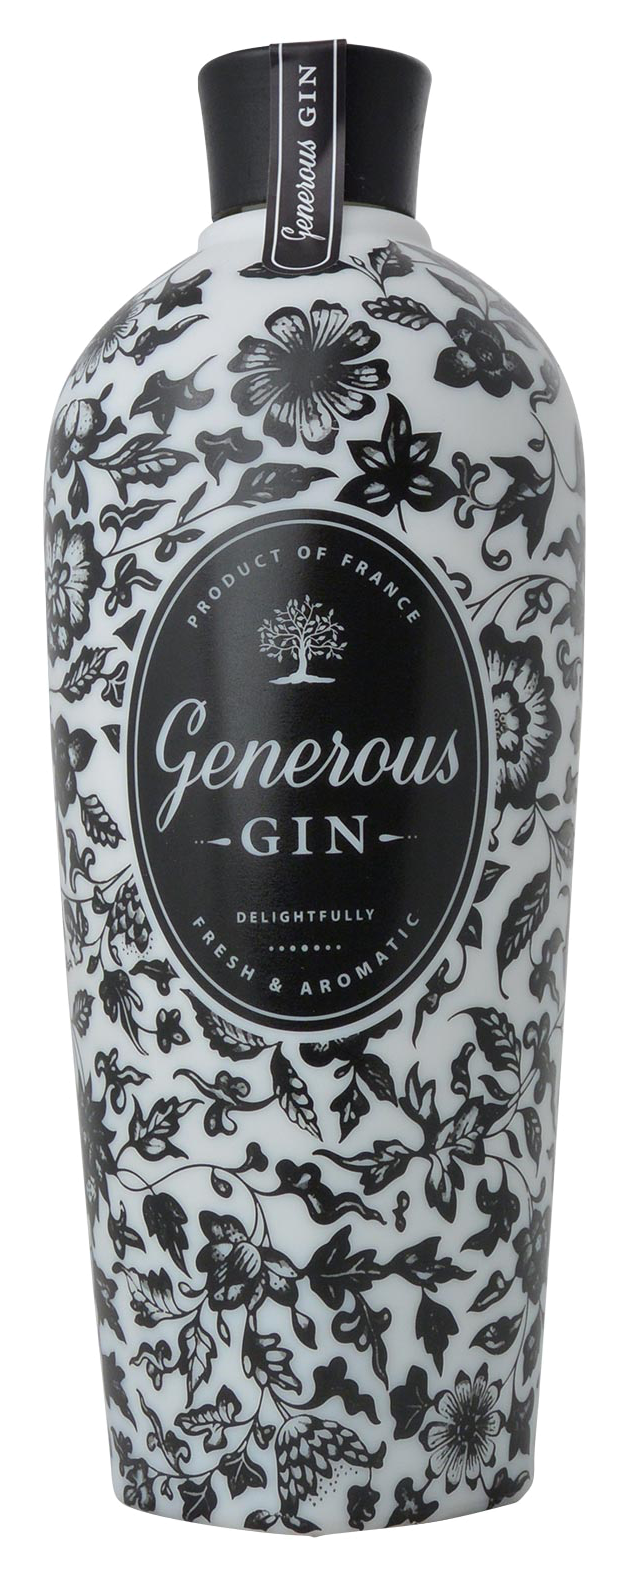 Gin 0.7. Джин generous Gin, 0.7 л. Gin французский. Дженероуз. Дженероуз перпл Джин.